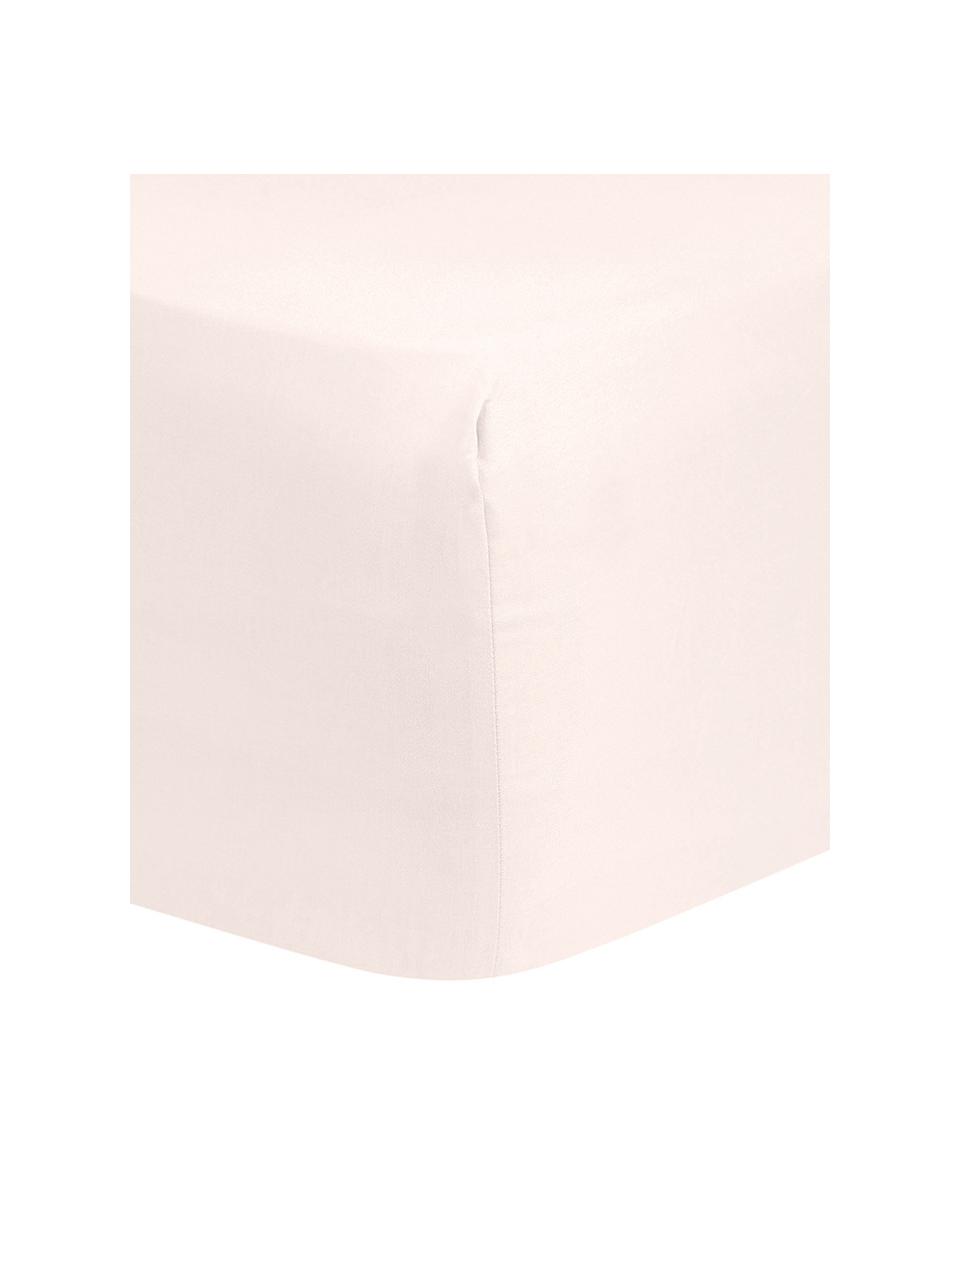 Spannbettlaken Comfort in Rosa, Baumwollsatin, Webart: Satin, Rosa, B 140 x L 200 cm